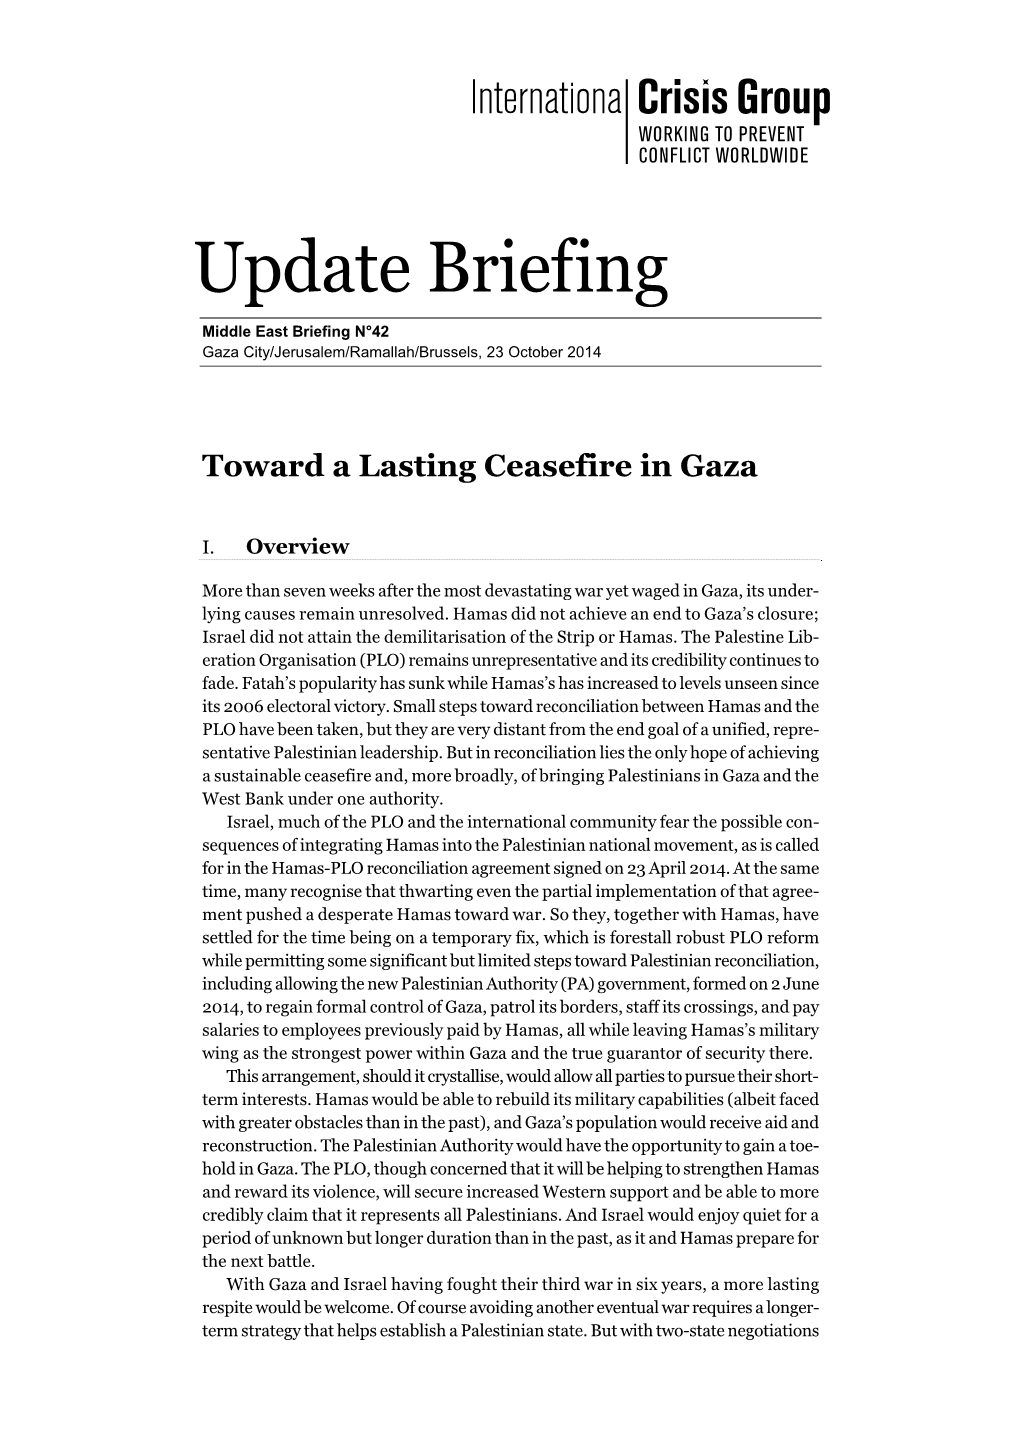 Toward a Lasting Ceasefire in Gaza